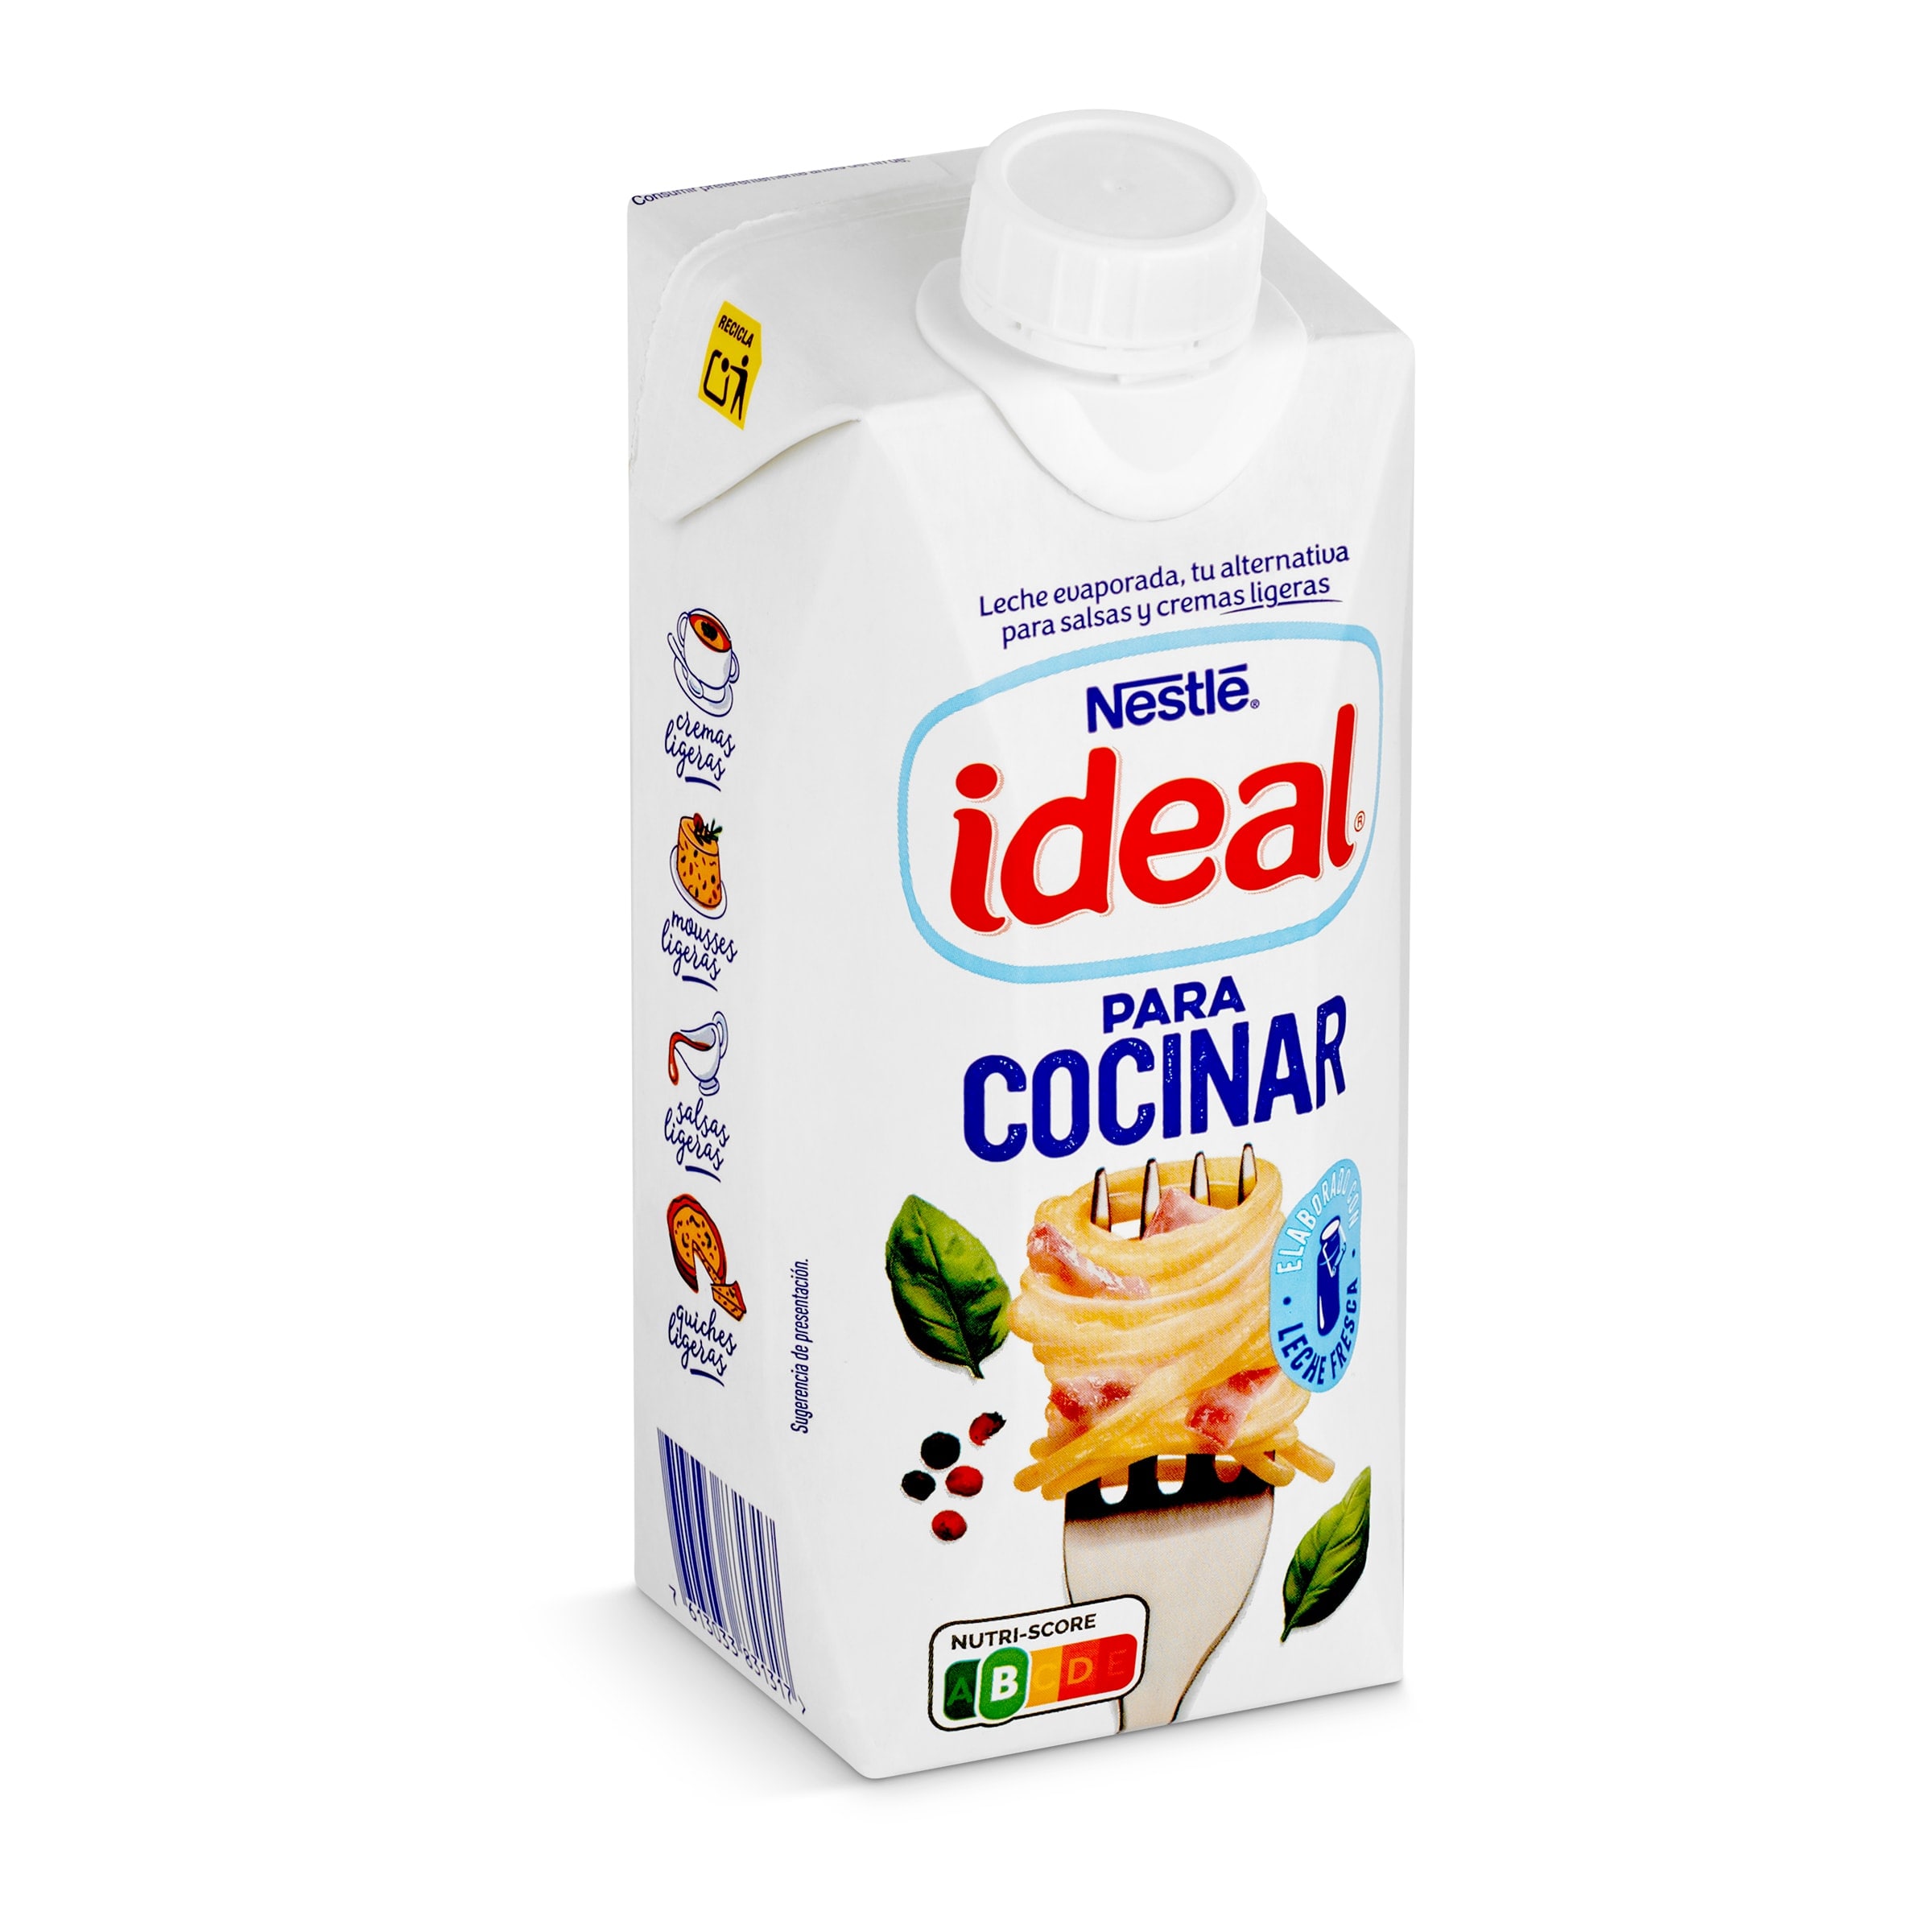 Nata para montar Central Lechera Asturiana brik 500 ml - Supermercados DIA